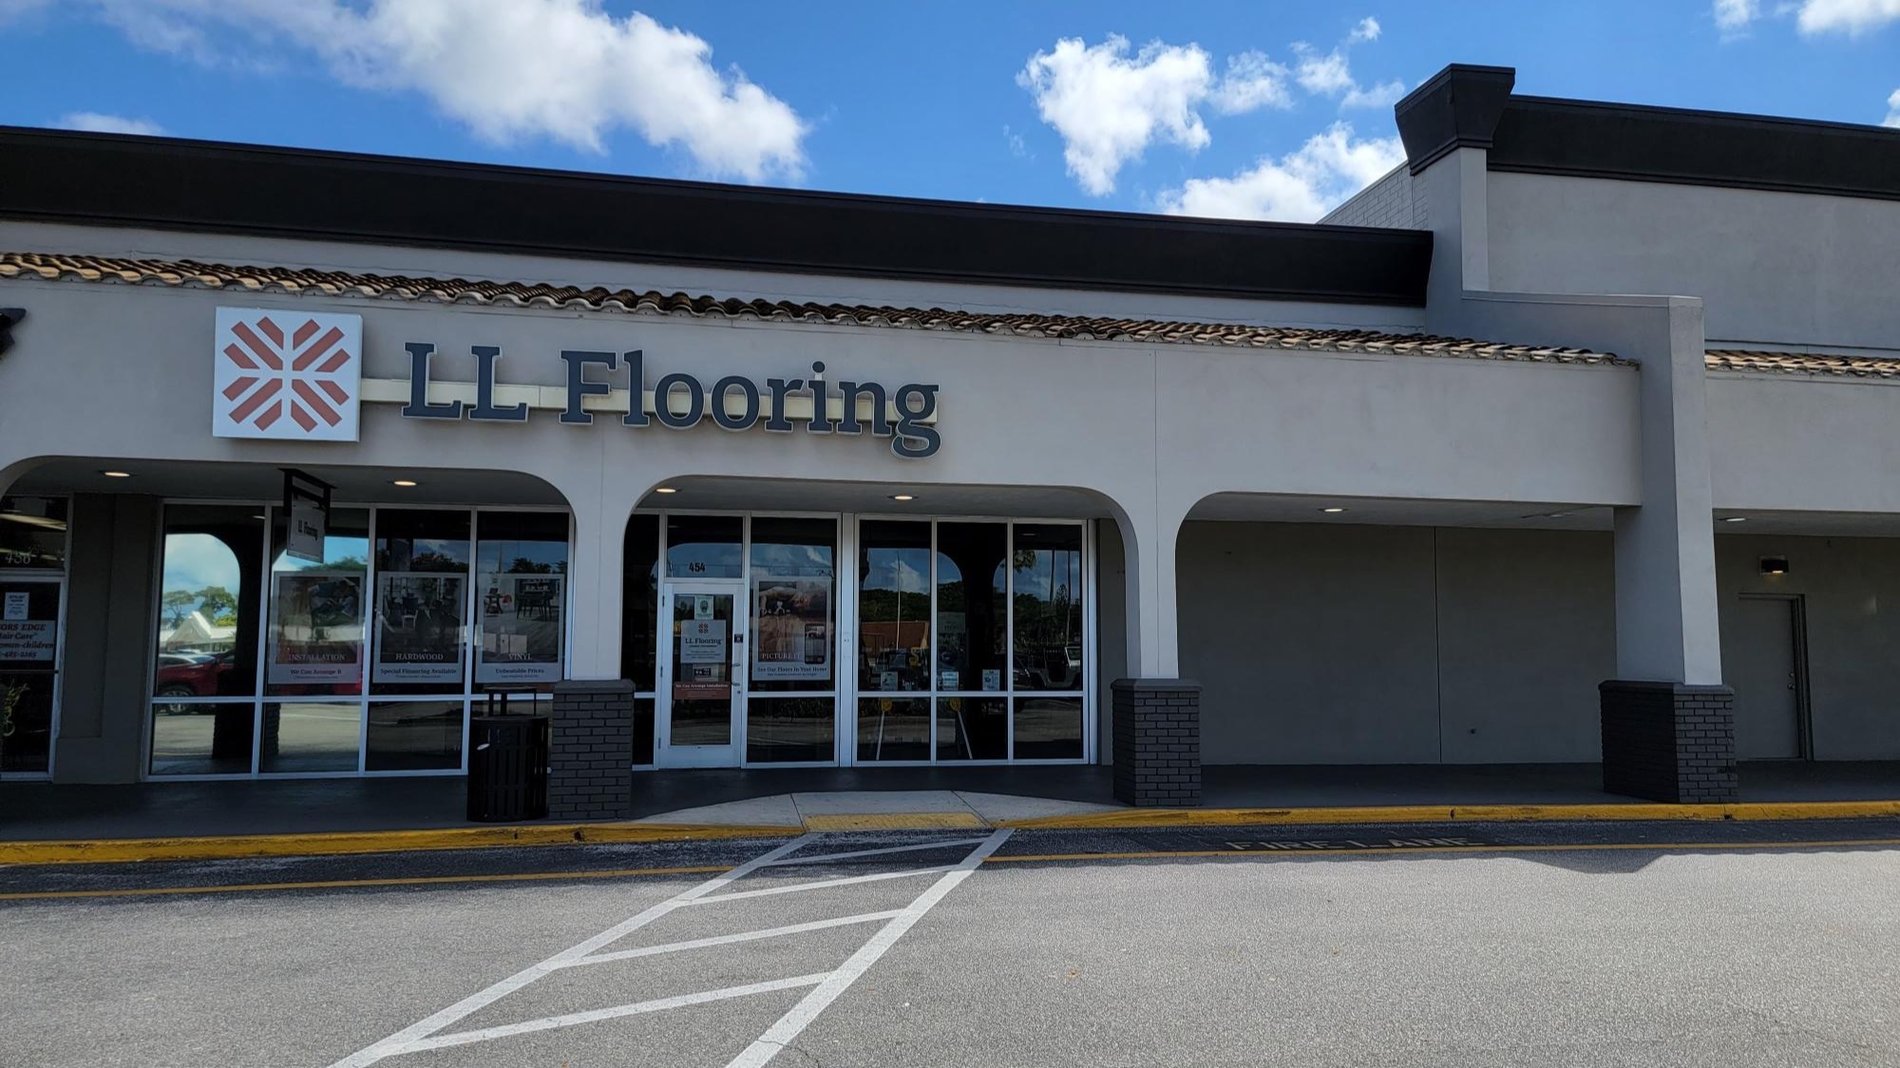 LL Flooring #1369 Venice | 454 US 41 Bypass N. | Storefront